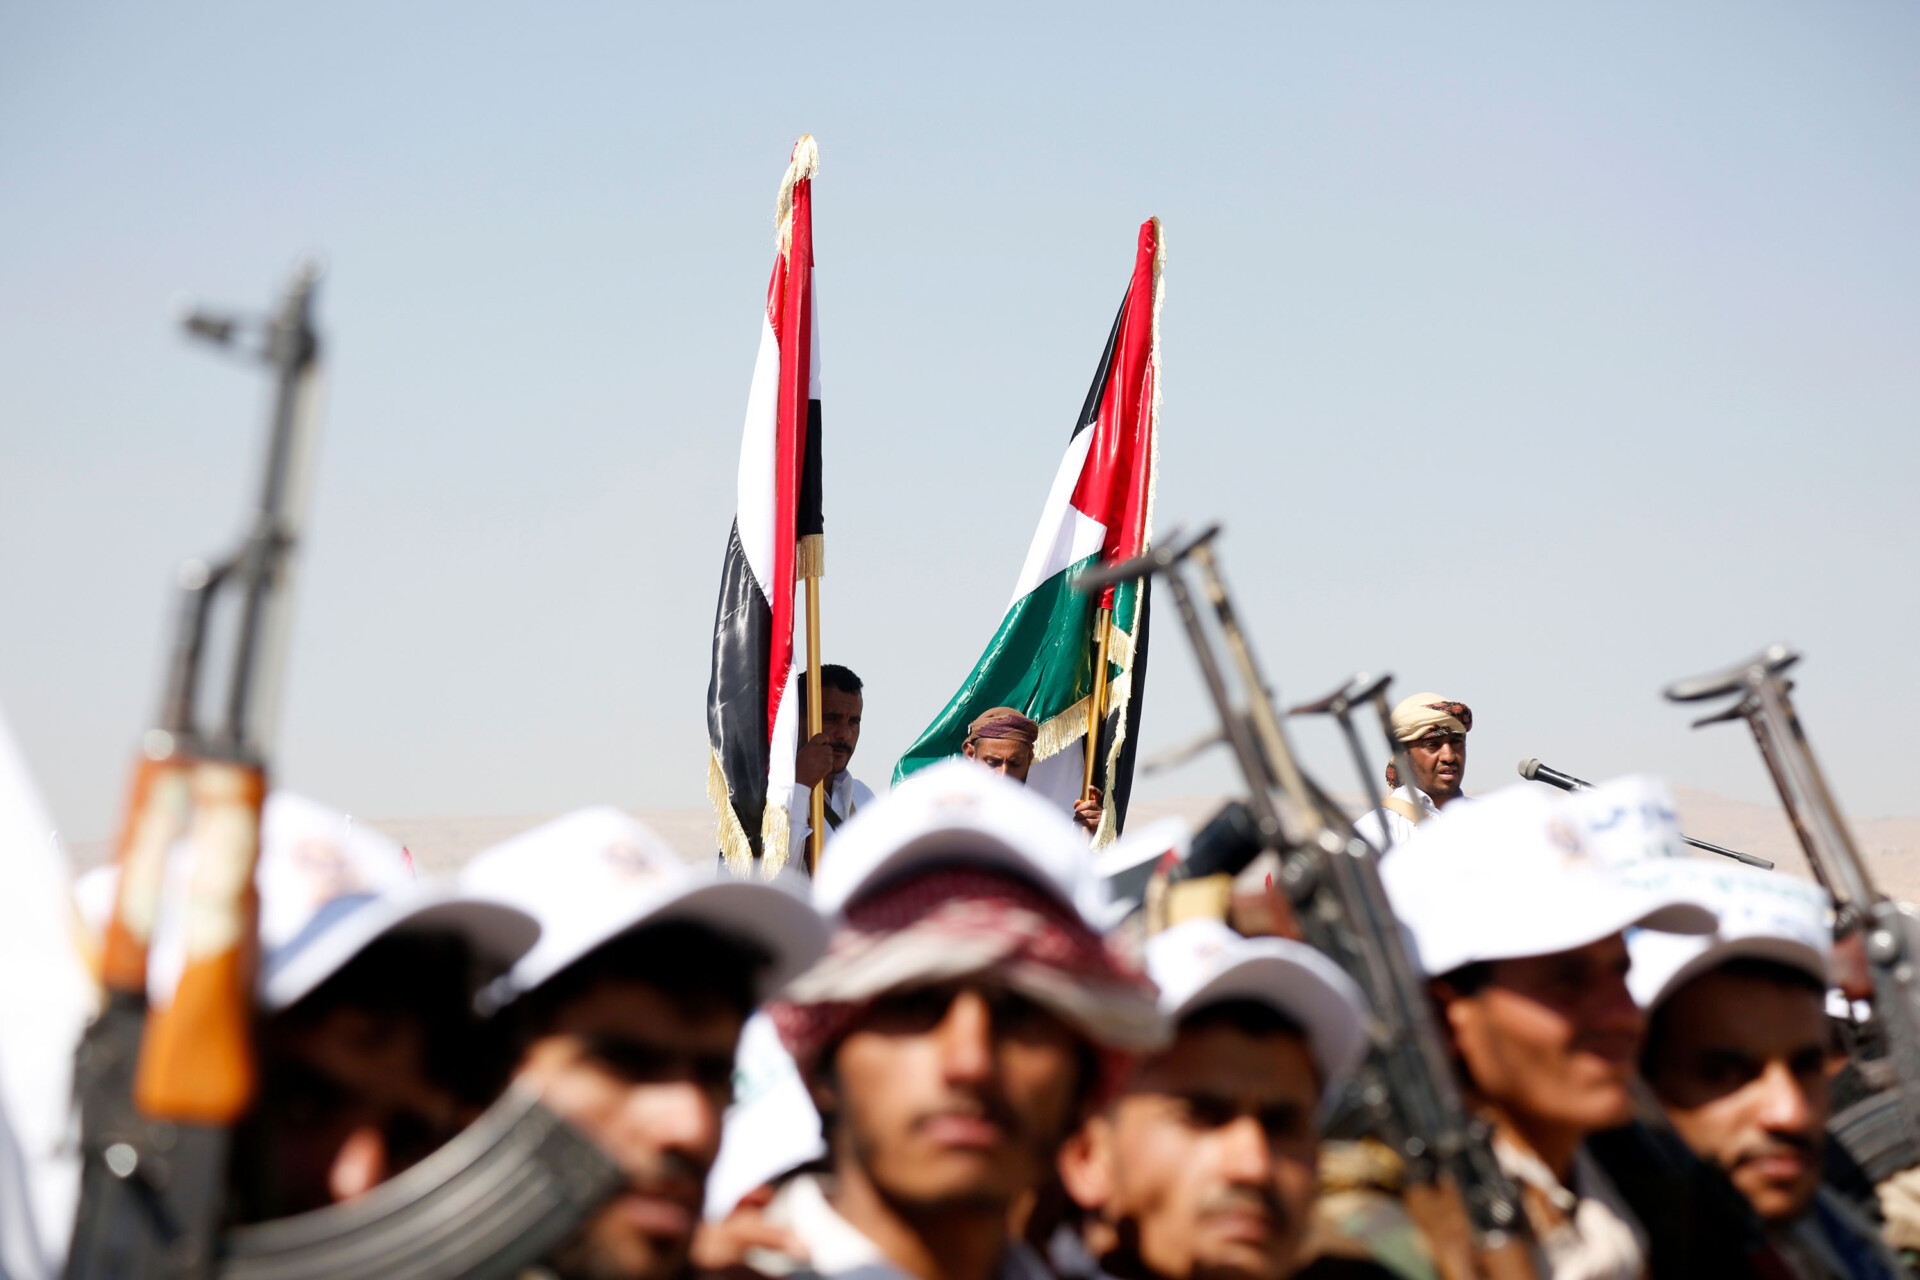 Amid a Houthi Escalation, Iran’s Gray Zones Begin to Shrink